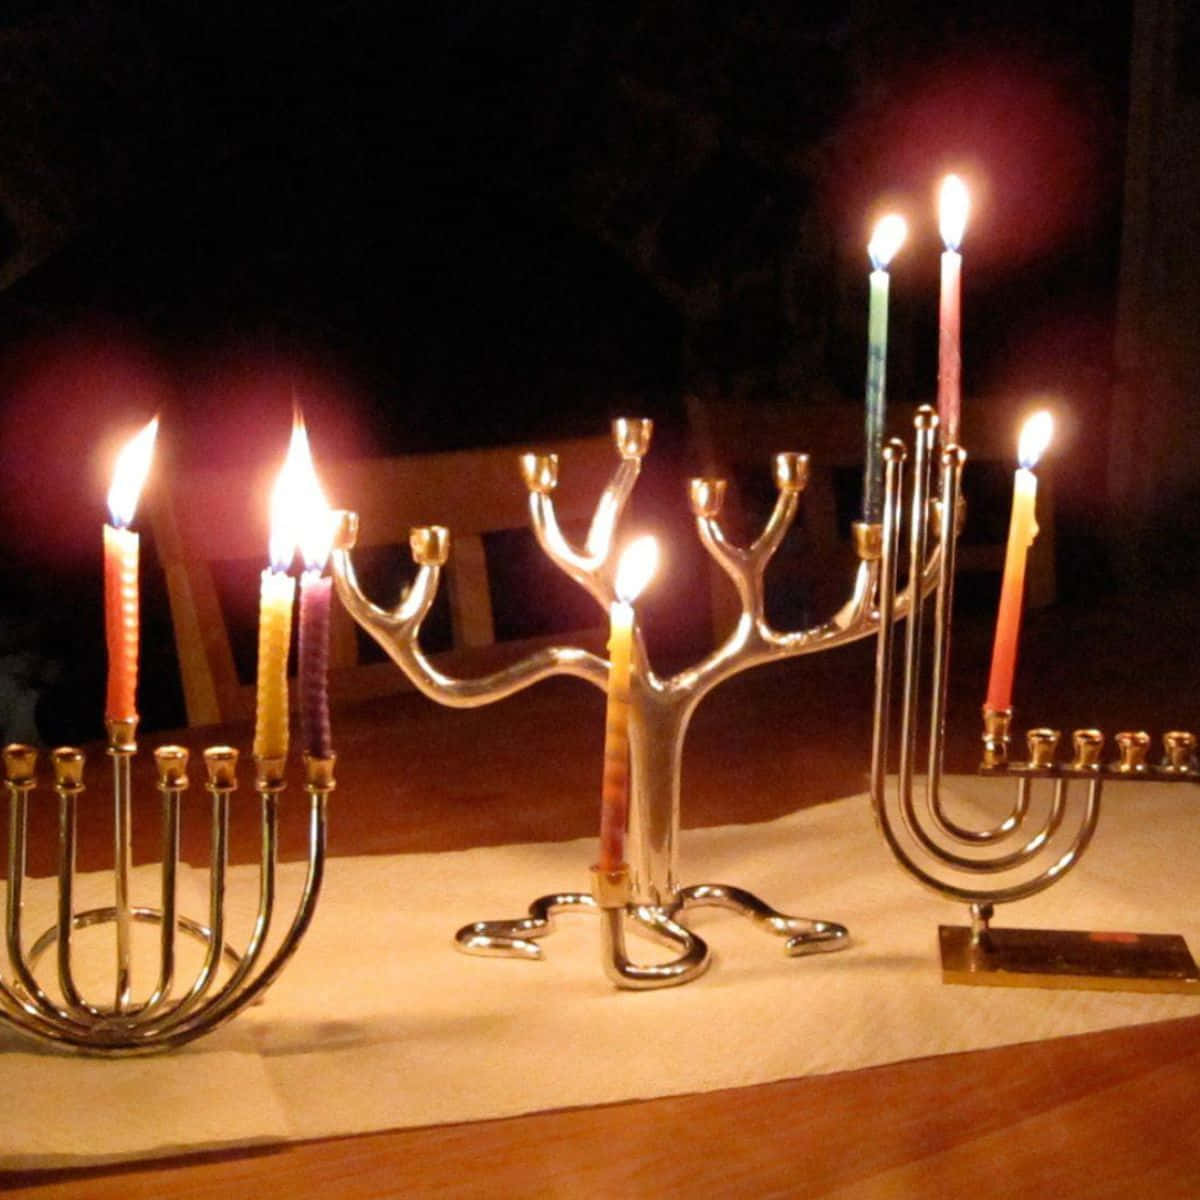 Celebrate Hanukkah with Joy and Fun